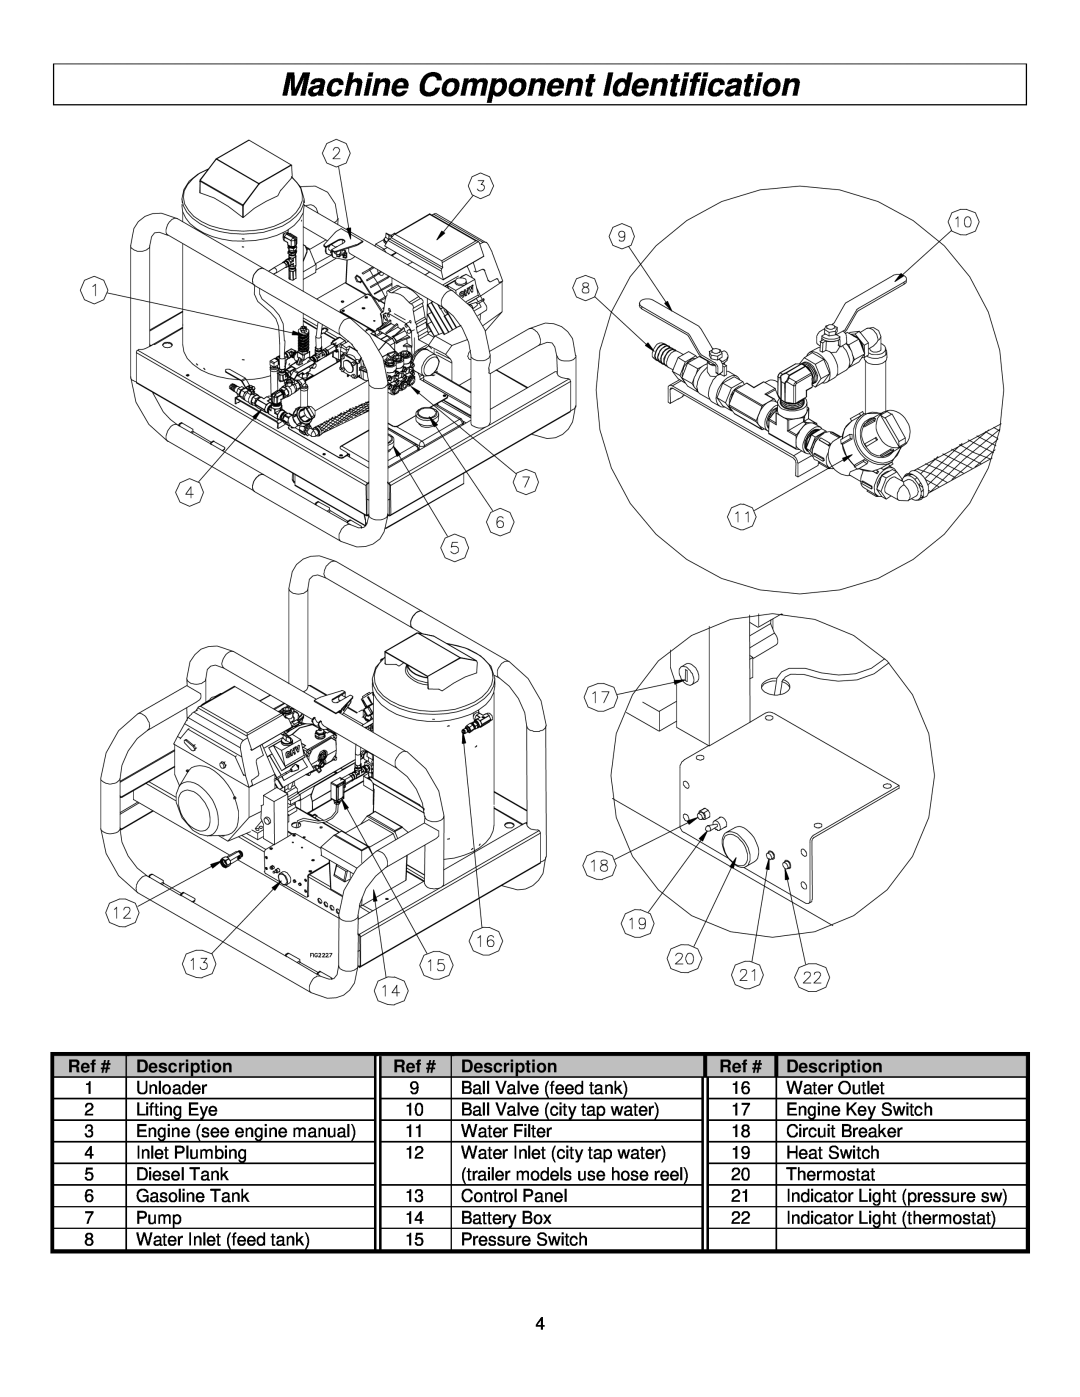 Panasonic M157594J specifications Machine Component Identification, Ref # Description 